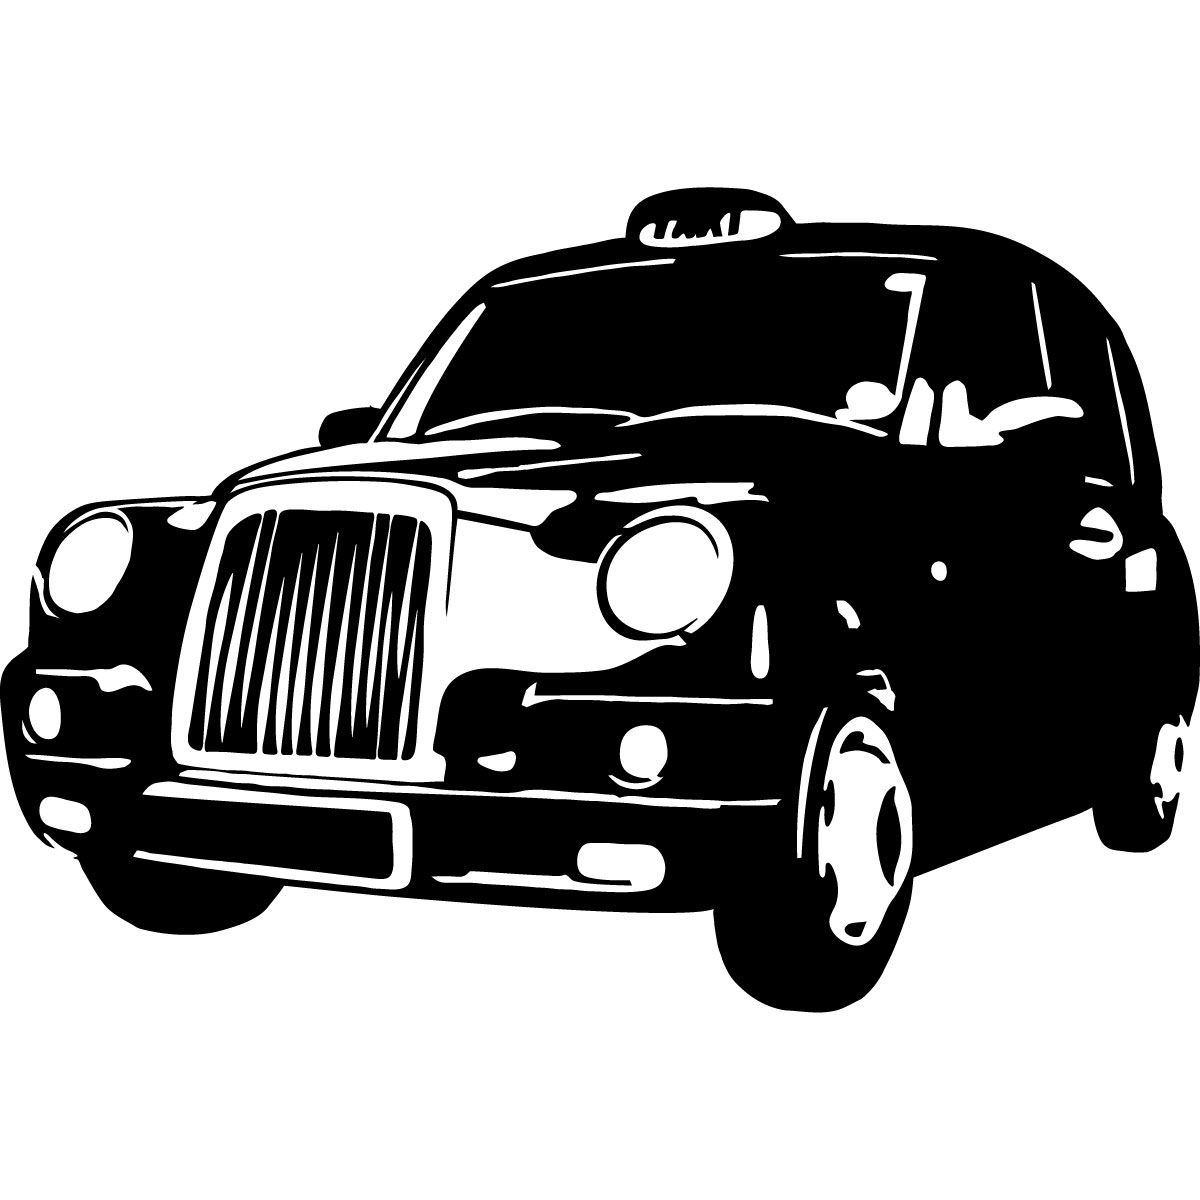 Black Taxi Png - City41 London Taxi Cab12_1409912713.jpg (1200×1200), Transparent background PNG HD thumbnail